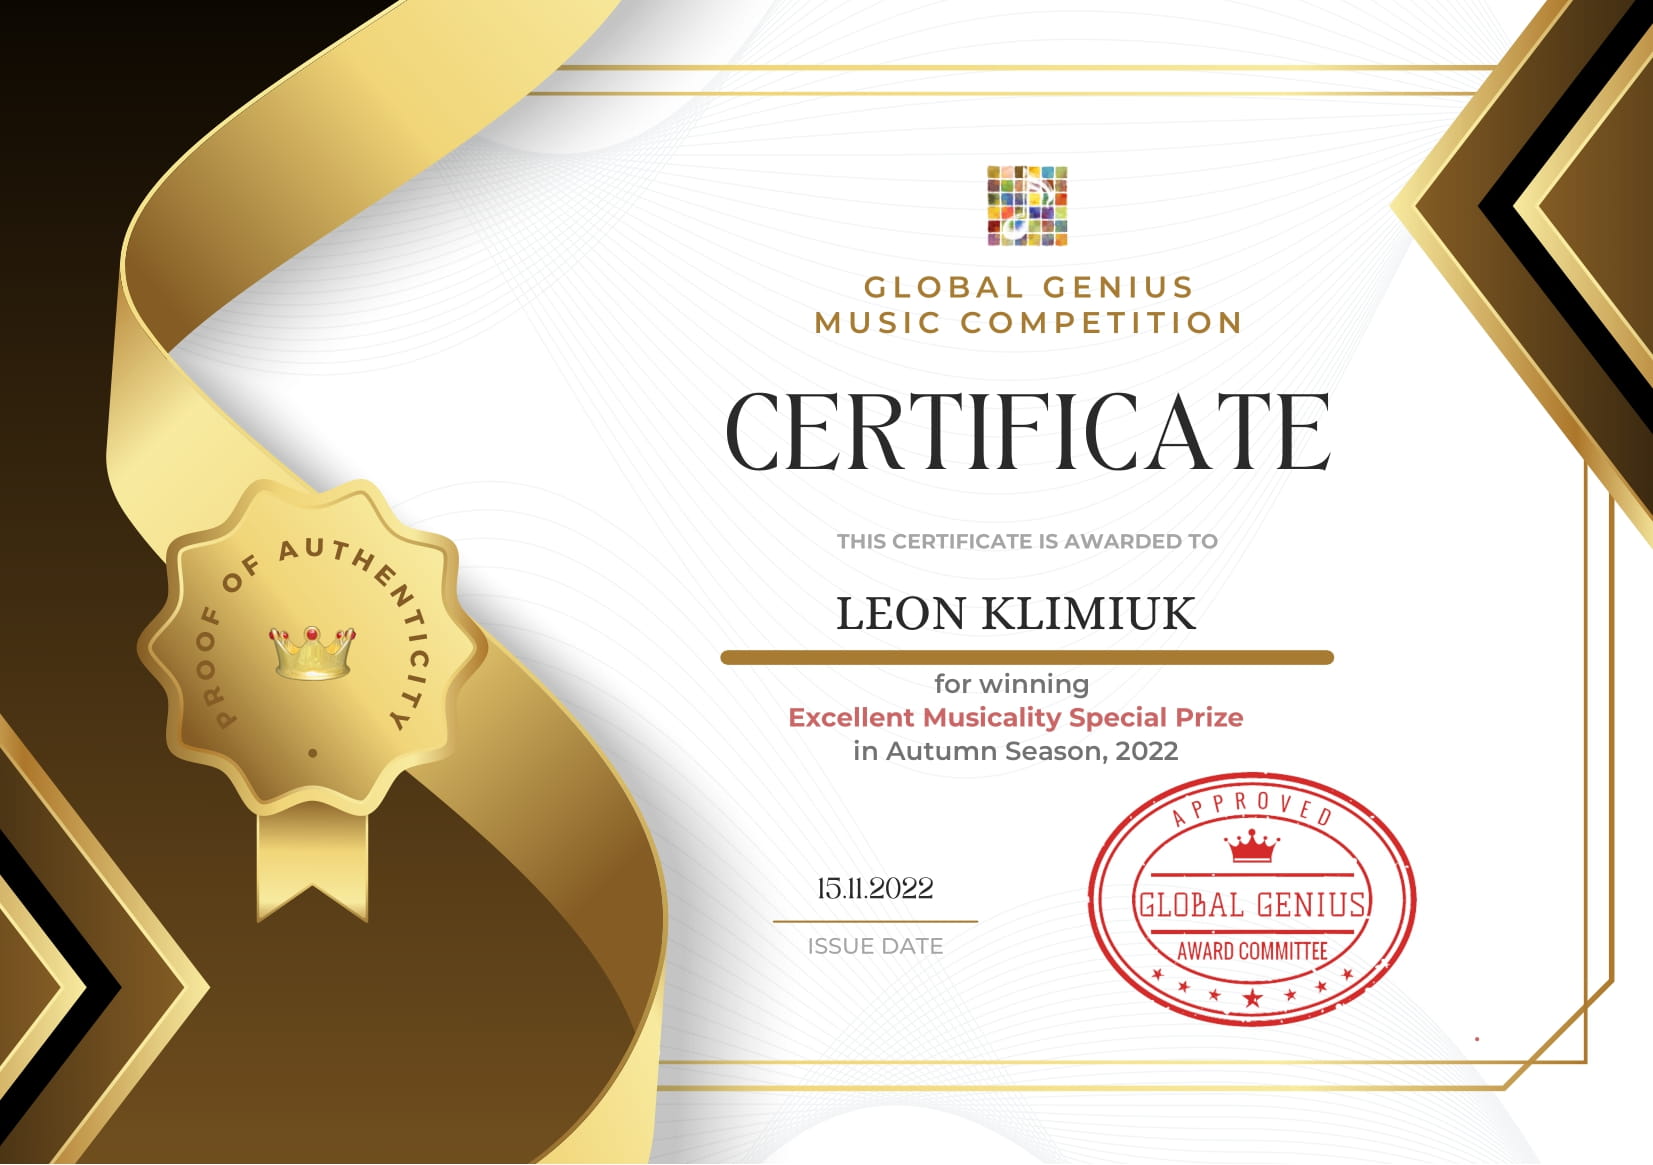 Leon Klimiuk Excellent Musicality Special Prize